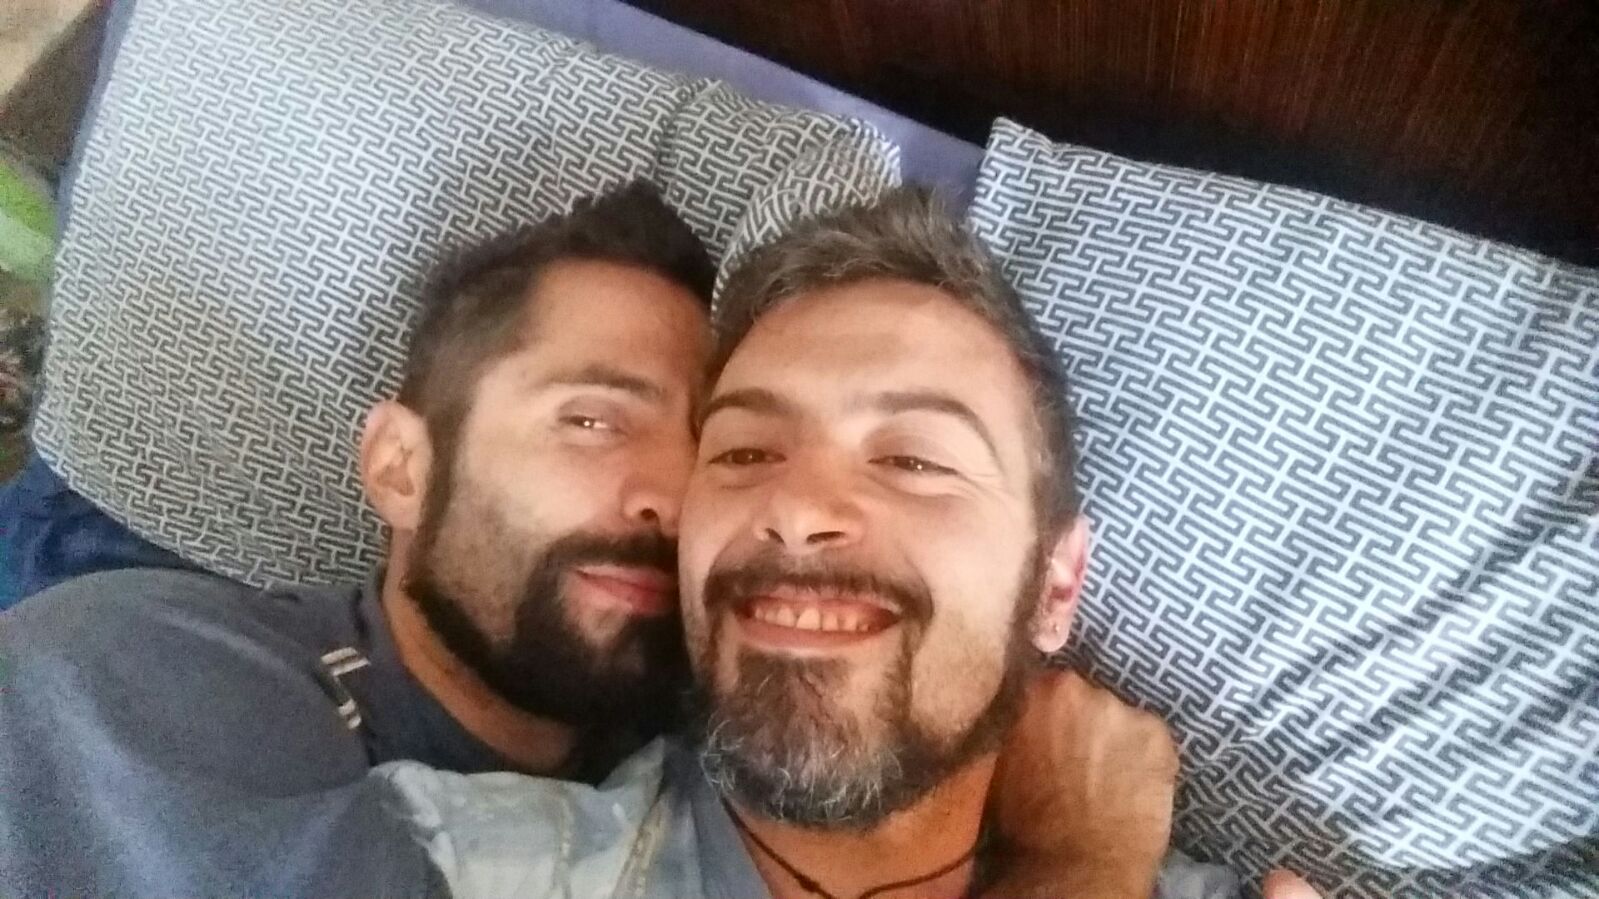 SIMPLY LOVE: Intervista a Marco e Alessio, una coppia di Grosseto - AovCmS0vpGtEXc urjVlY8rdY4ea55 bDb45aqXgEQ5t - Gay.it